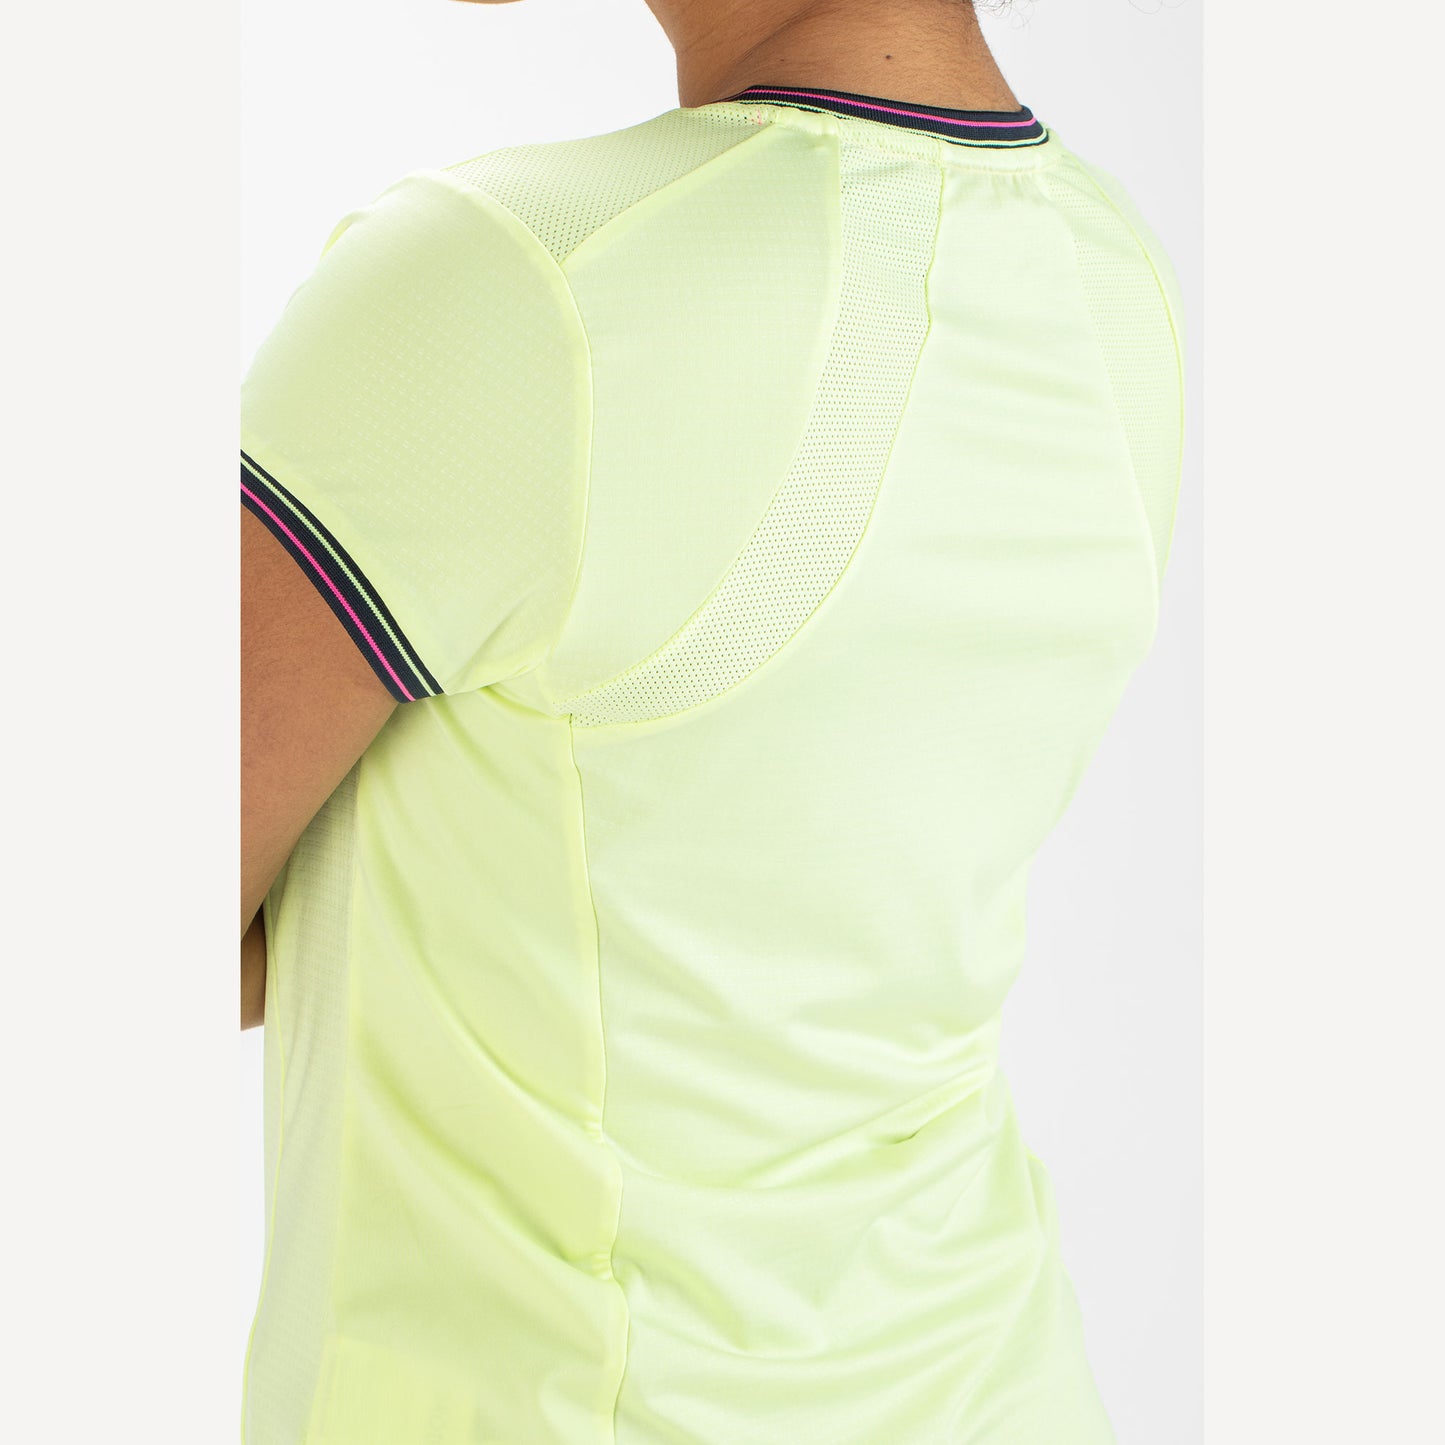 Sjeng Sports Dorothee Women's Tennis Shirt Yellow (4)